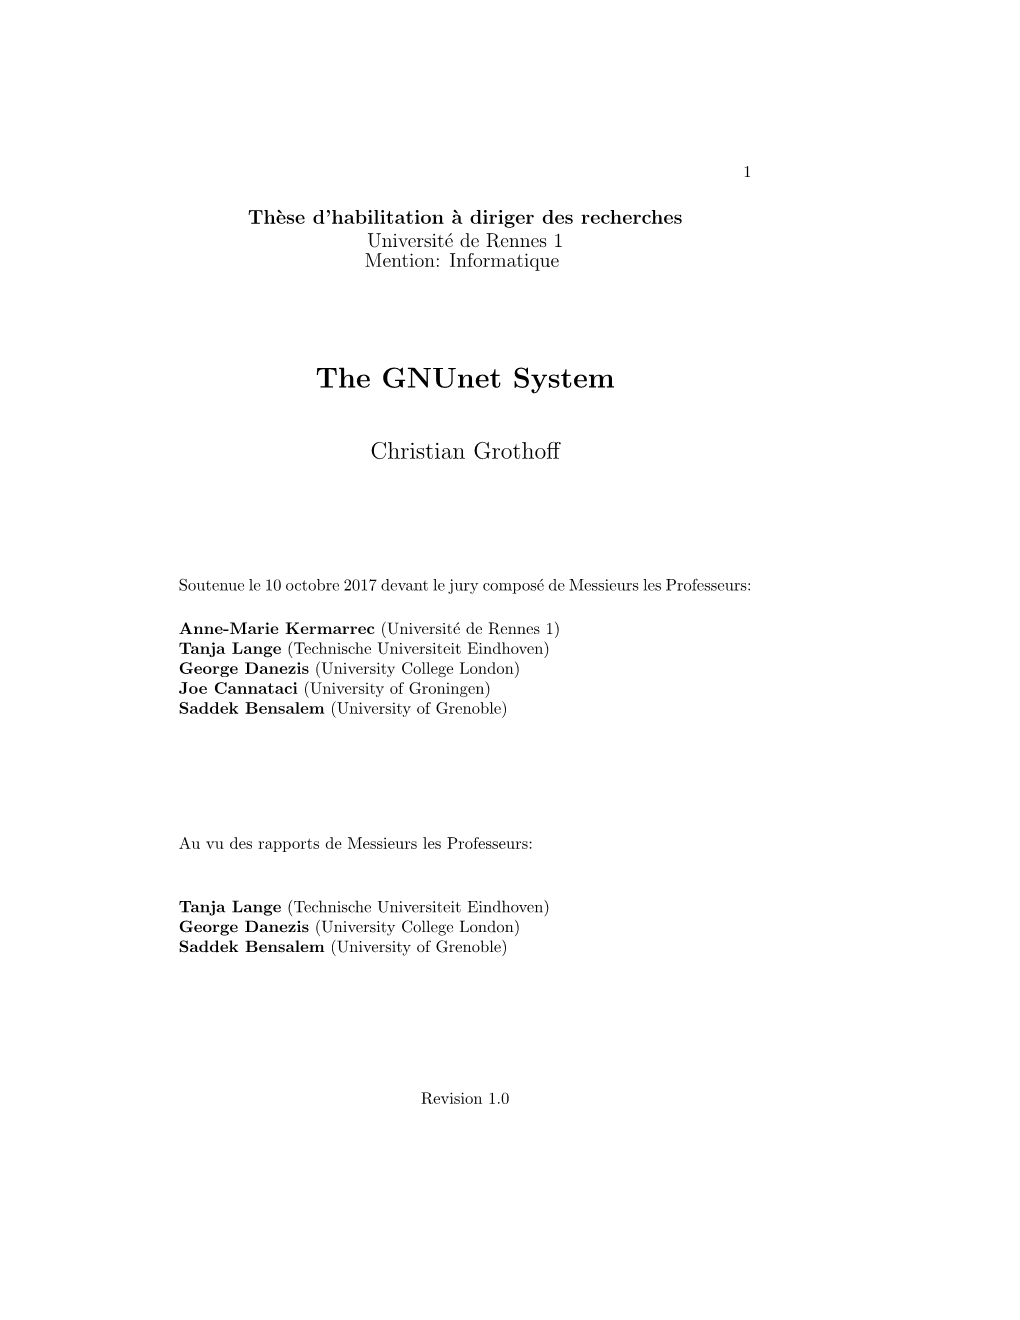 The Gnunet System